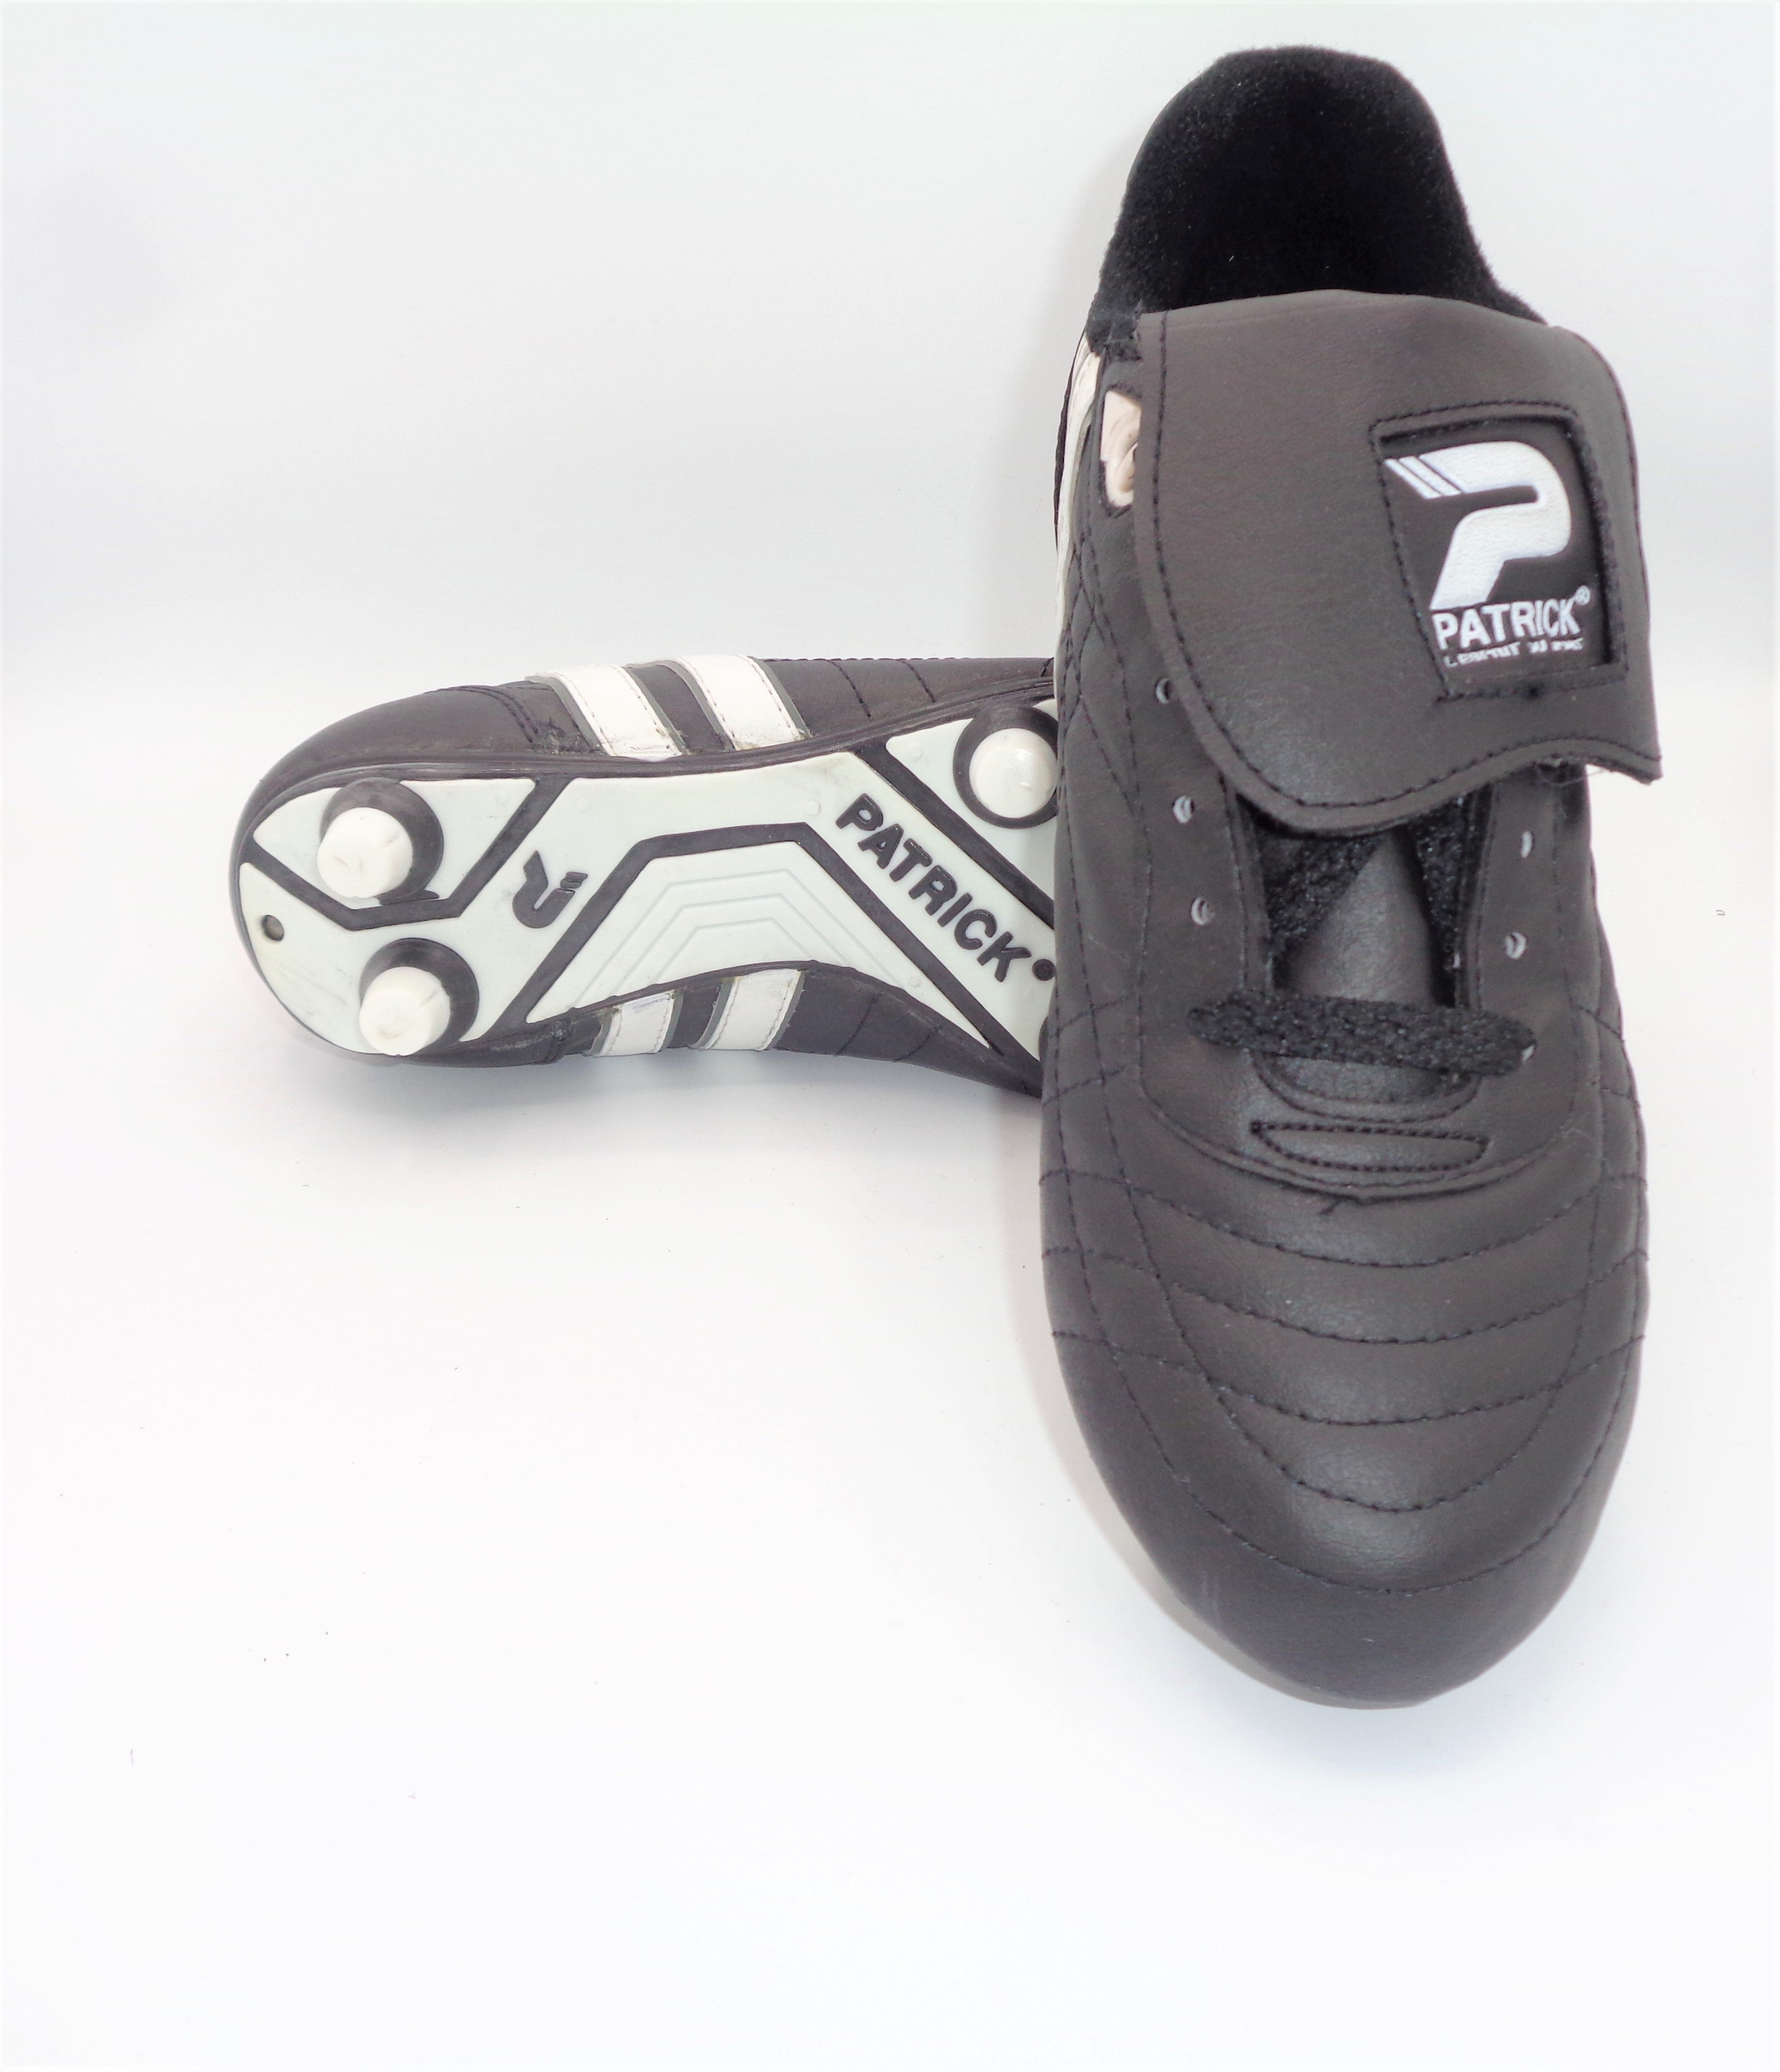 PATRICK CLASSIC BLACK WHITE FOOTBALL BOOTS - PATRICK - SIZE 5